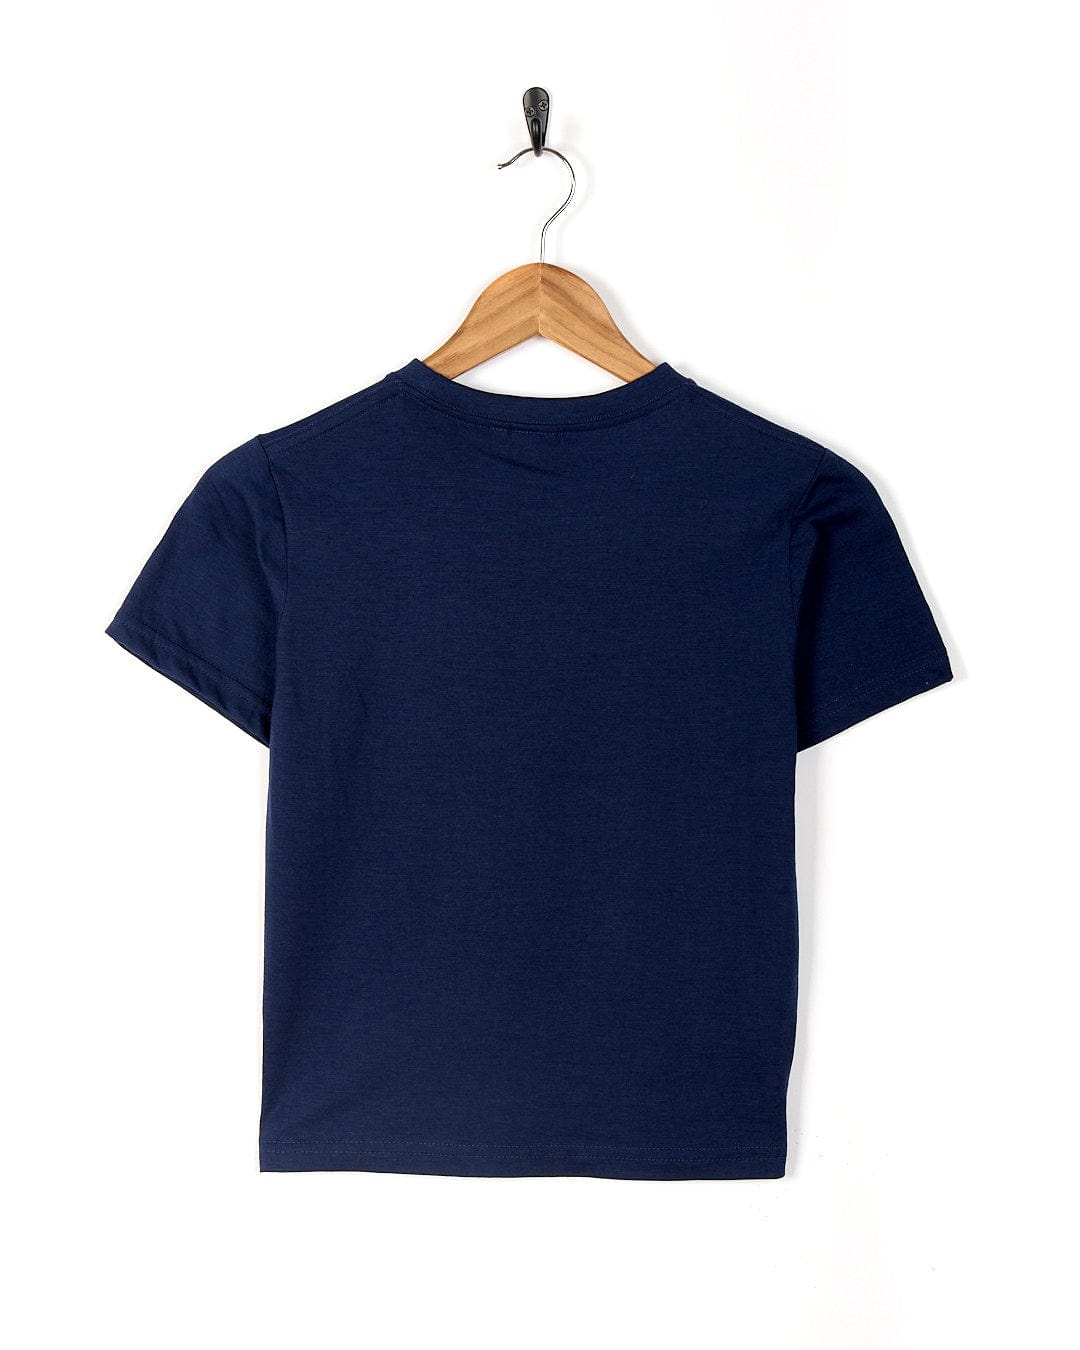 Saltrock Tok Stripe - Kids Short Sleeve T-Shirt - Dark Blue displayed on a wooden hanger against a white background.